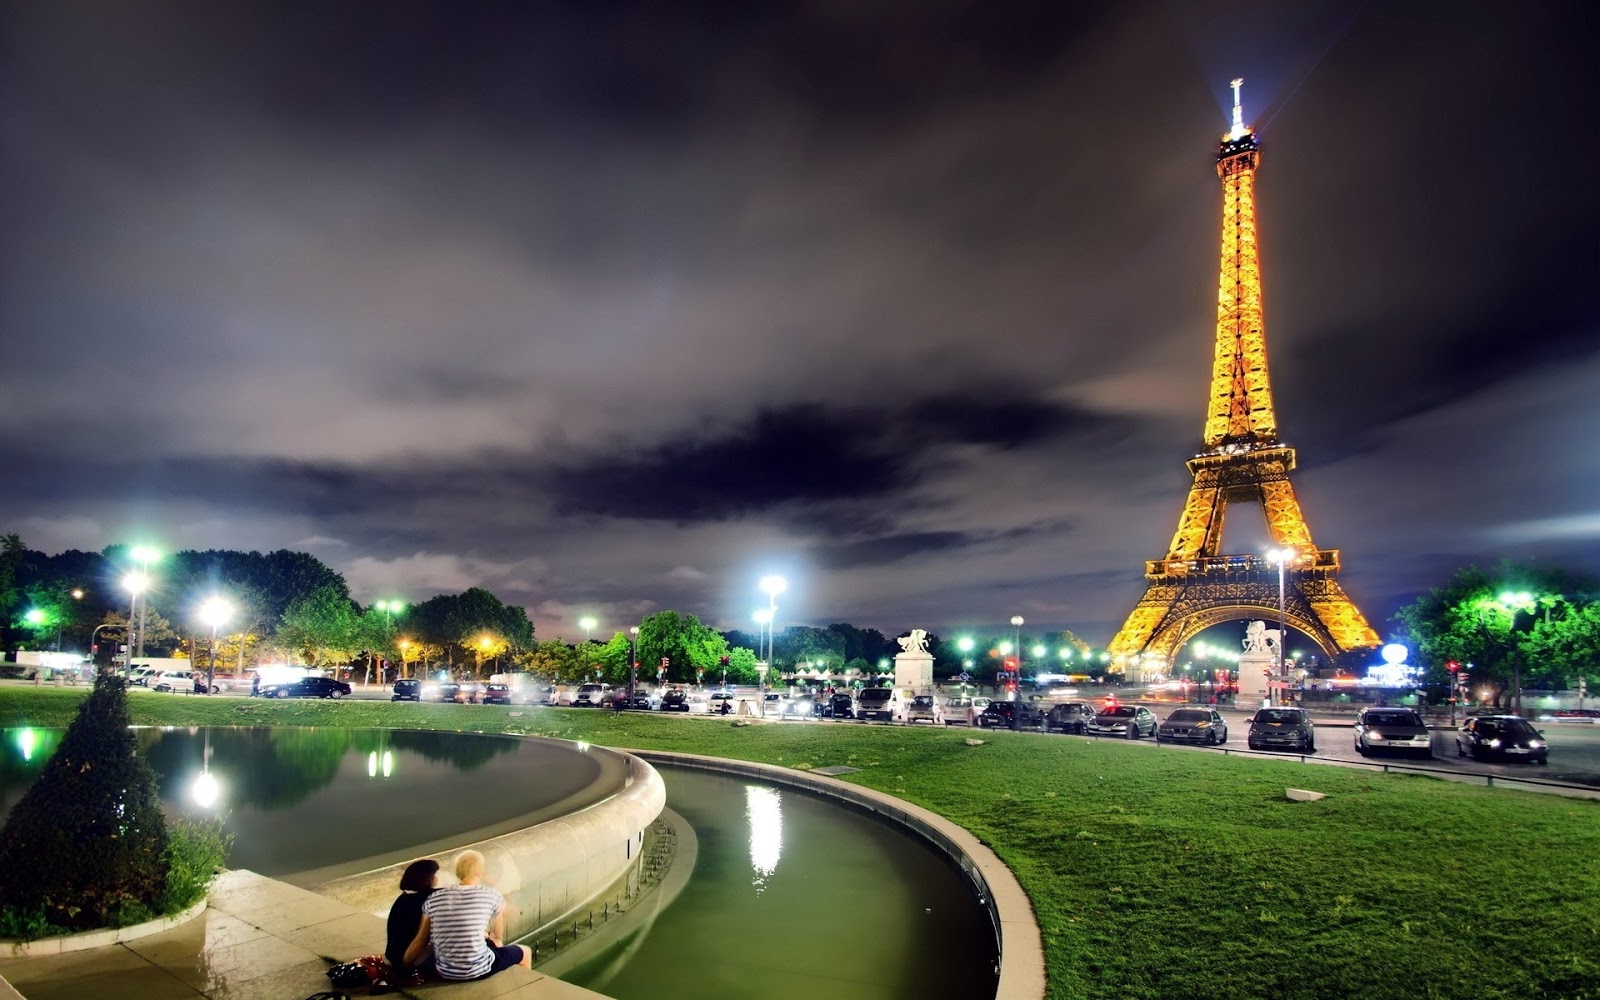 eShowBiz: Eiffel Tower At Night Awesome View